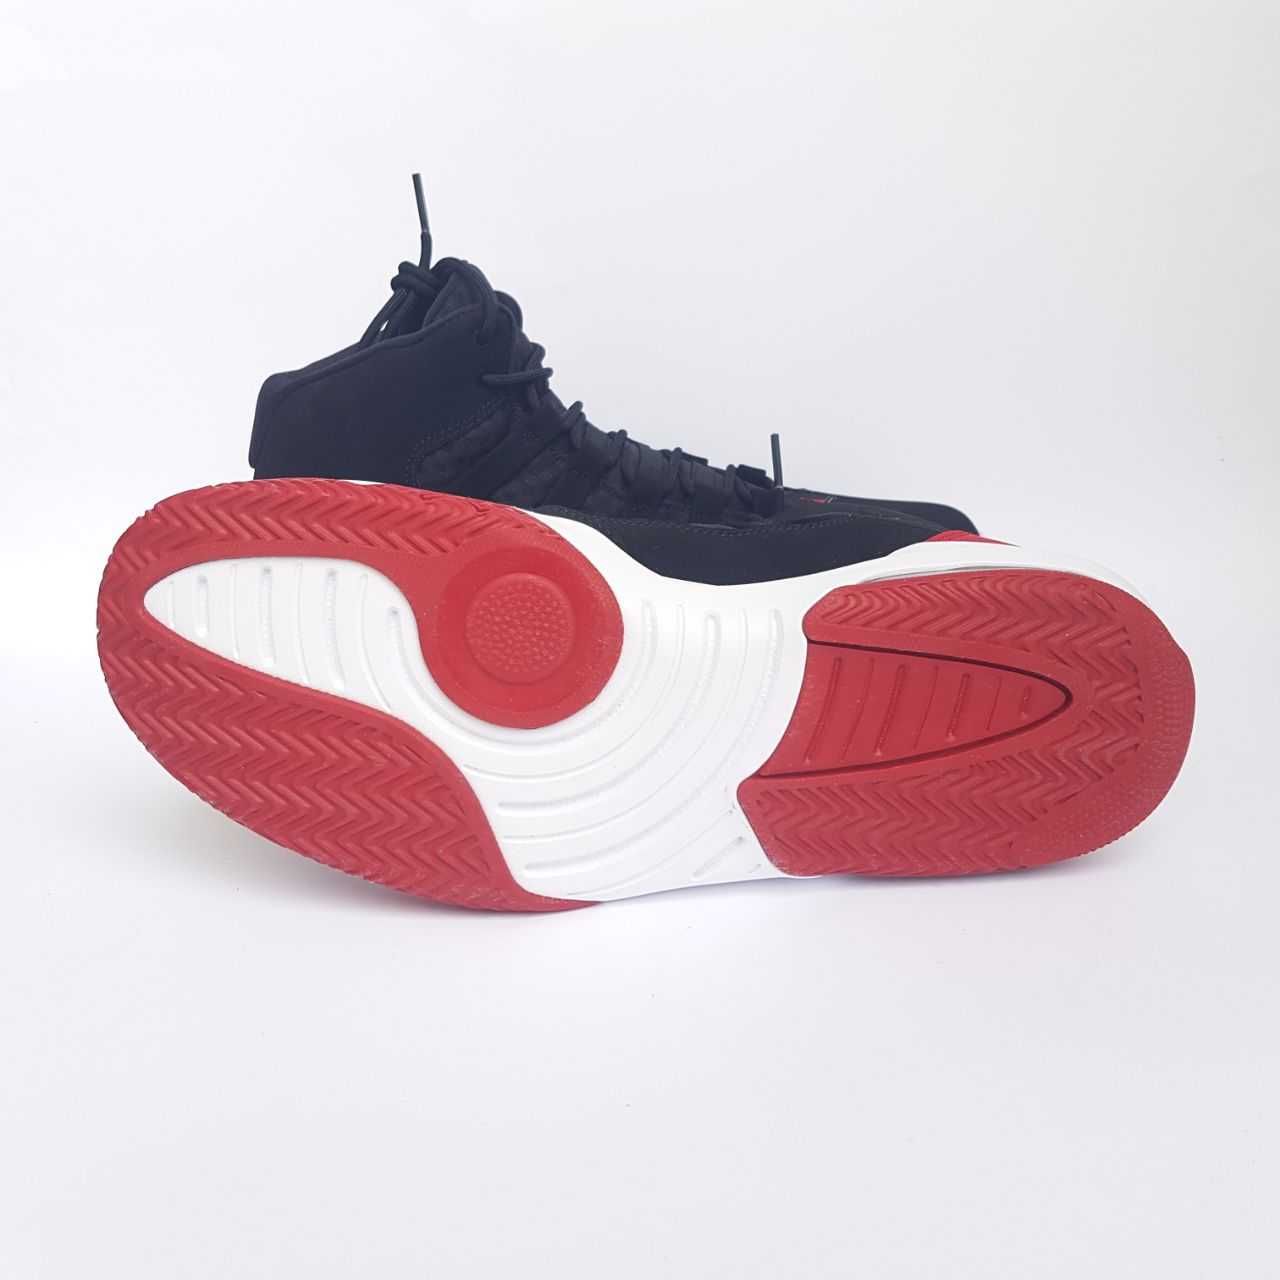 Sapatilhas Nike Jordan Max Aura Red Black